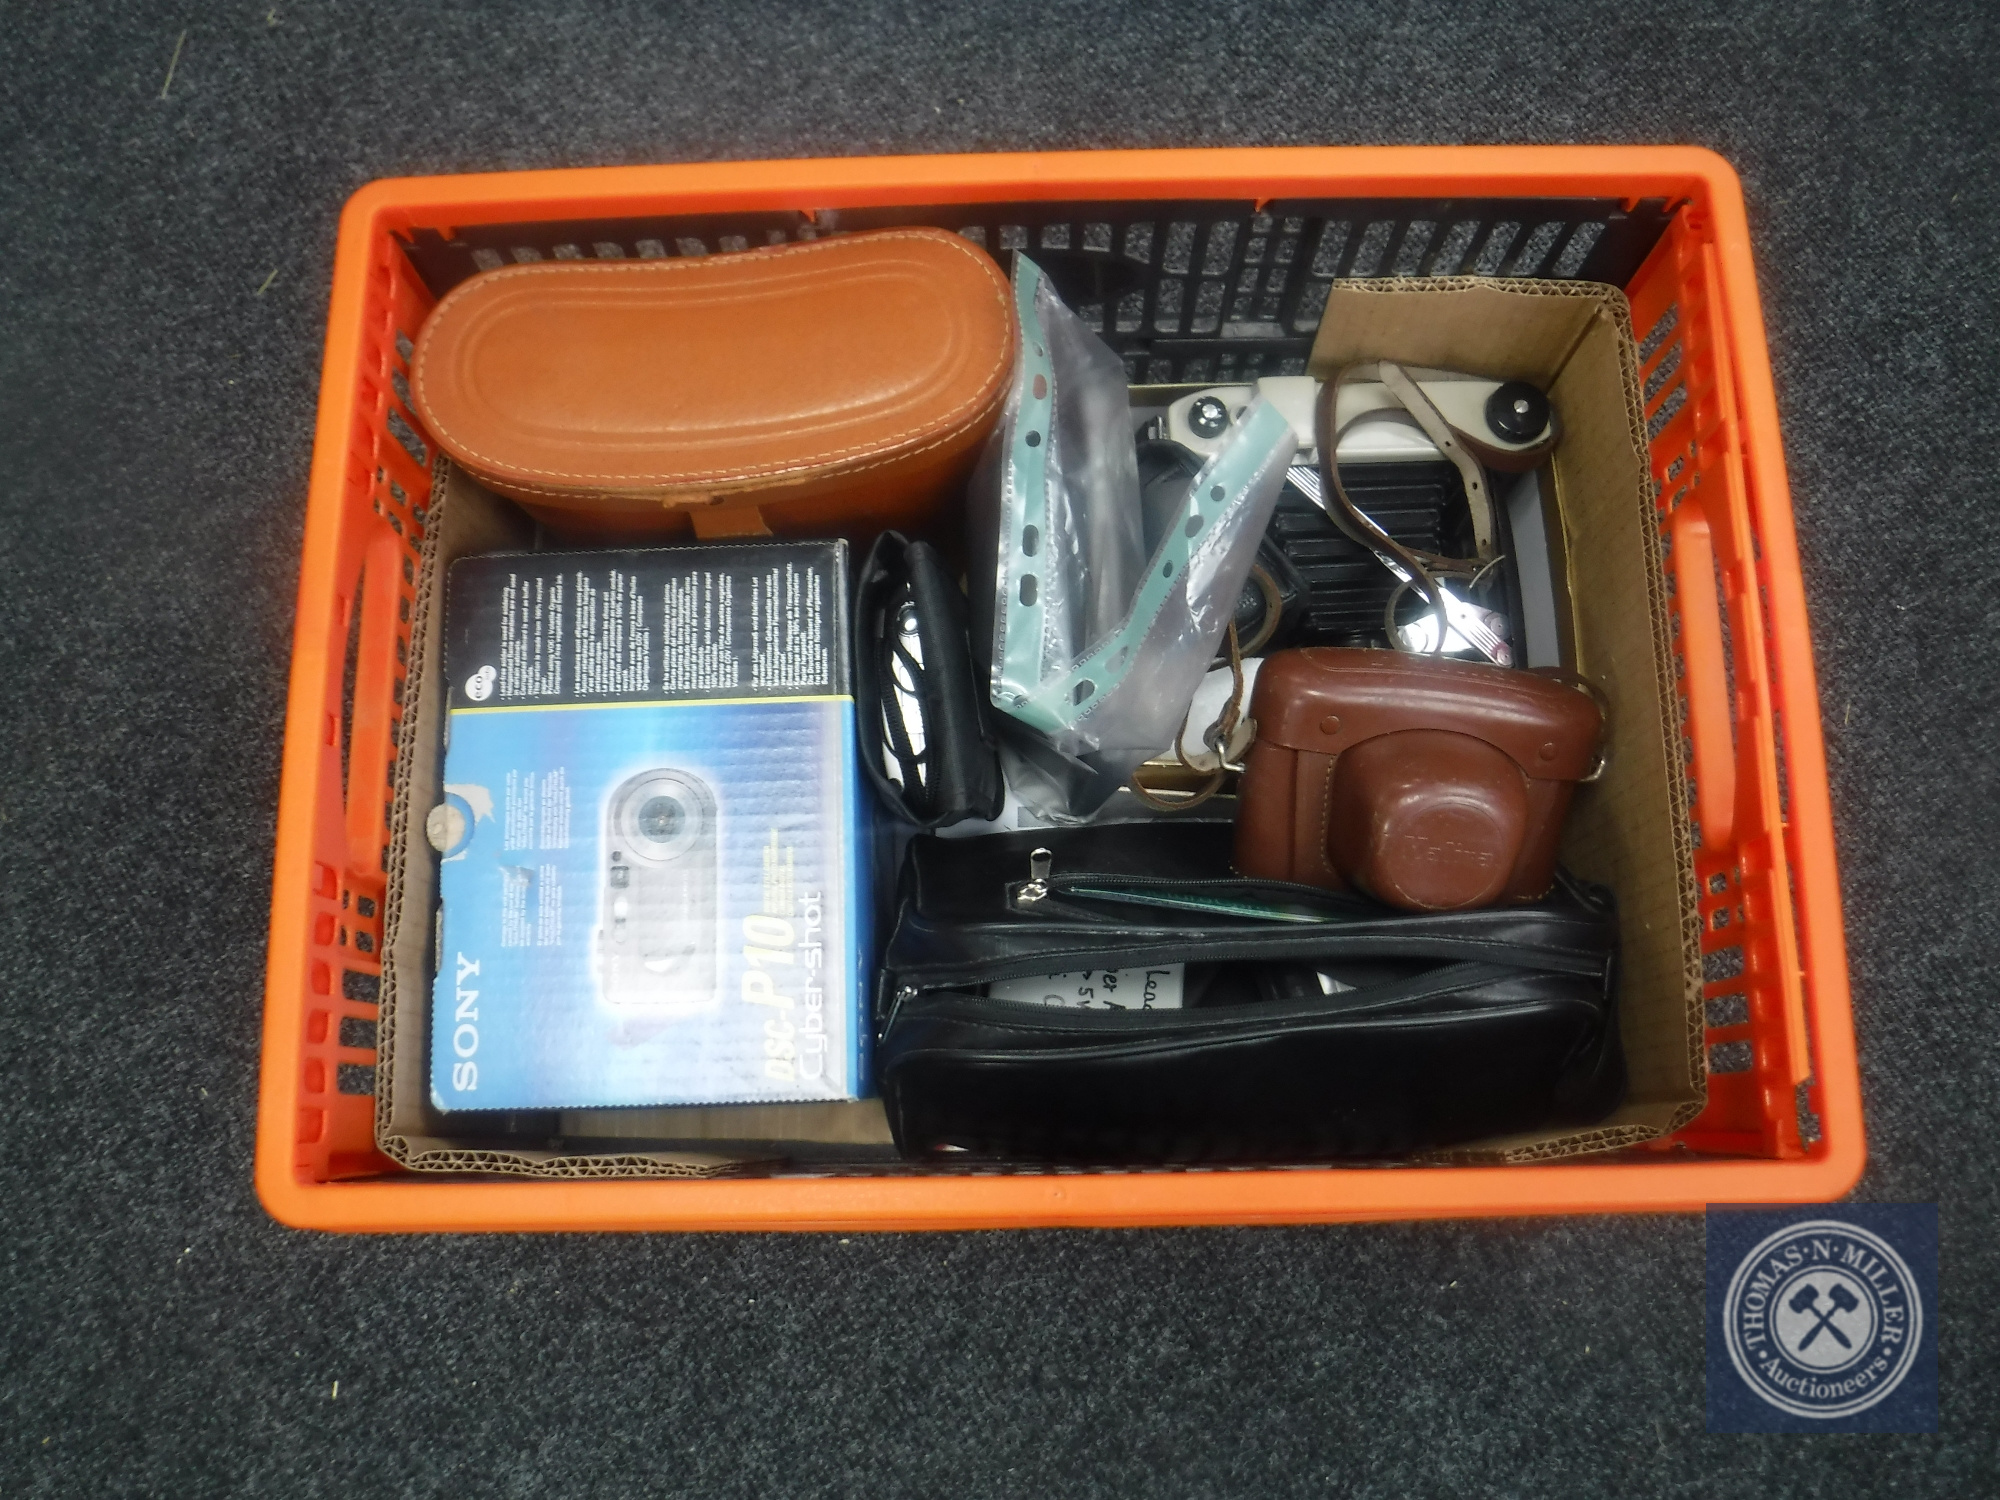 A box of cased Omega 30 x 50 binoculars IM sport binoculars and digital cameras by Sony,